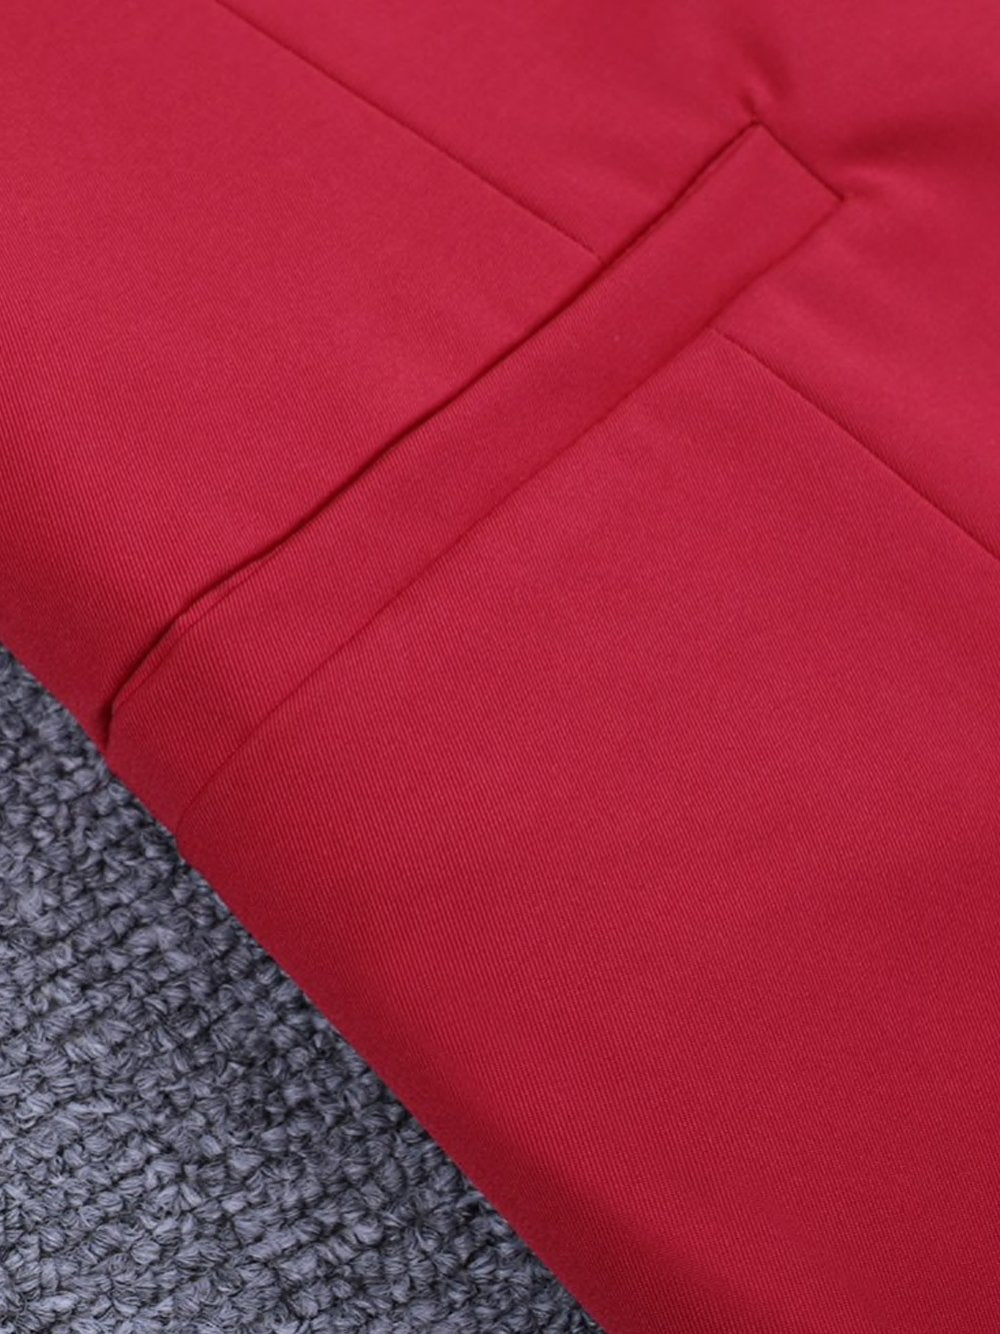 GF Red Half Sequined Asymmetrical Mini Dress